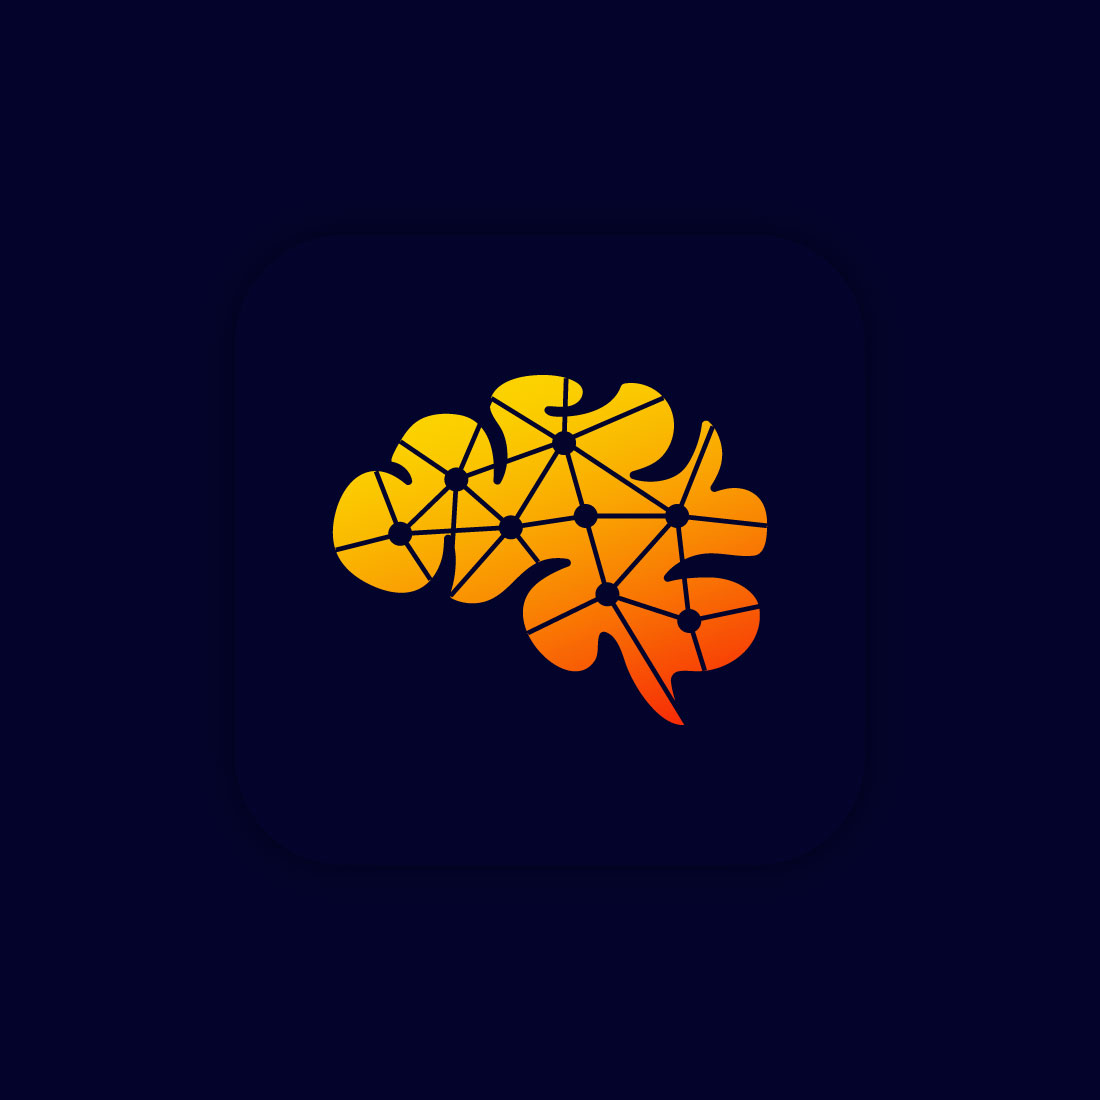 Modern | Brain | Mind | Tech line | Technology Logo Design cover image.